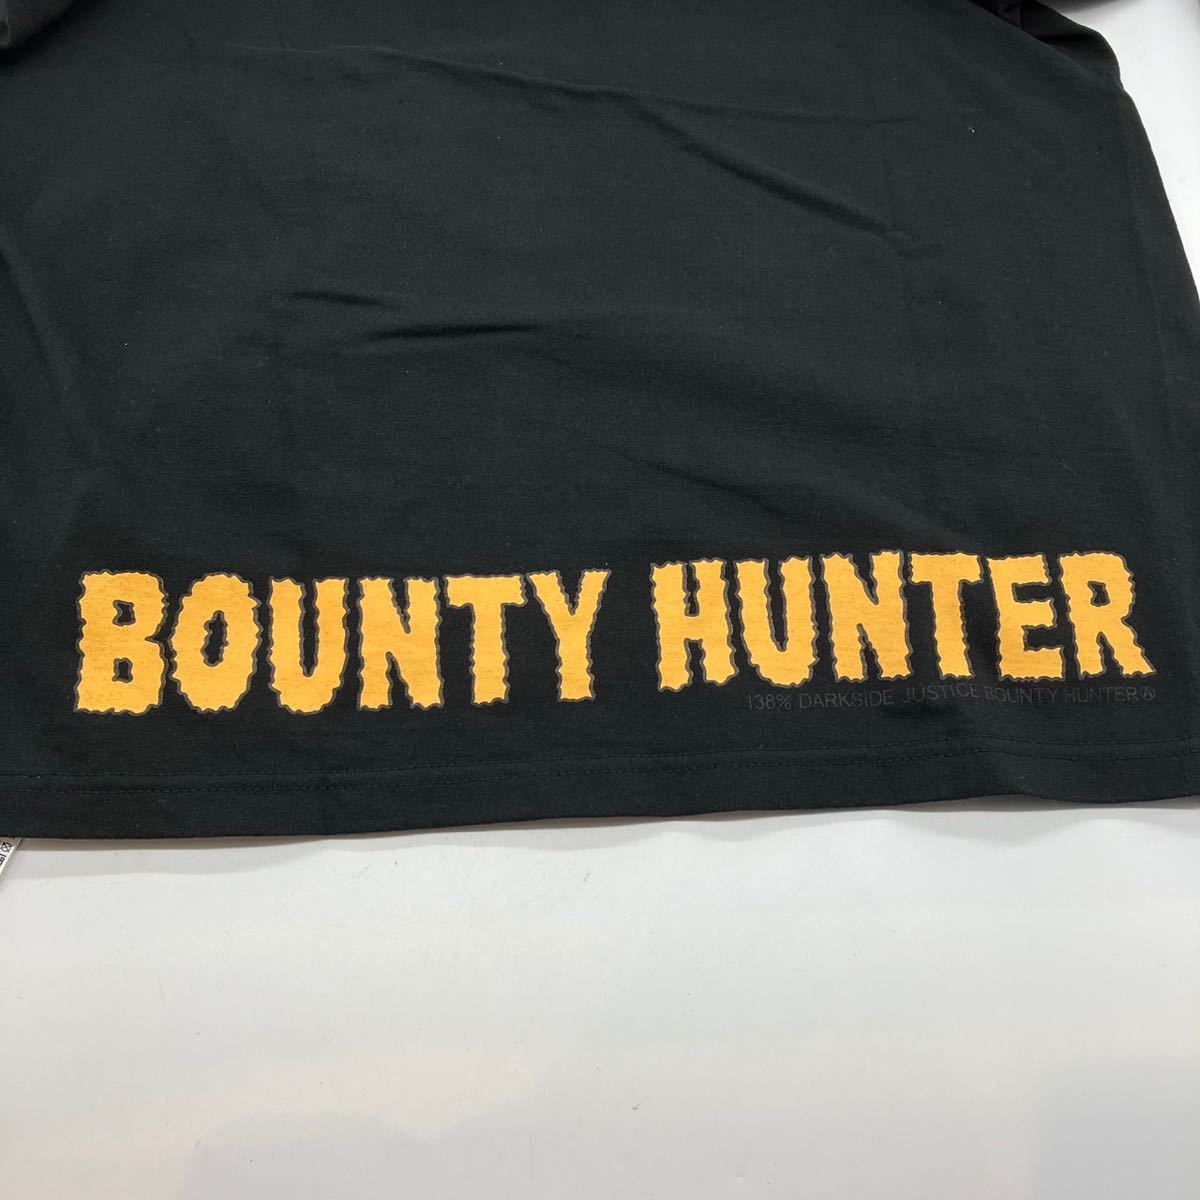 【L】BOUNTY HUNTER logo tee black バウンティー ハンター ロゴ Tシャツ 黒 裾プリントG2327_画像4